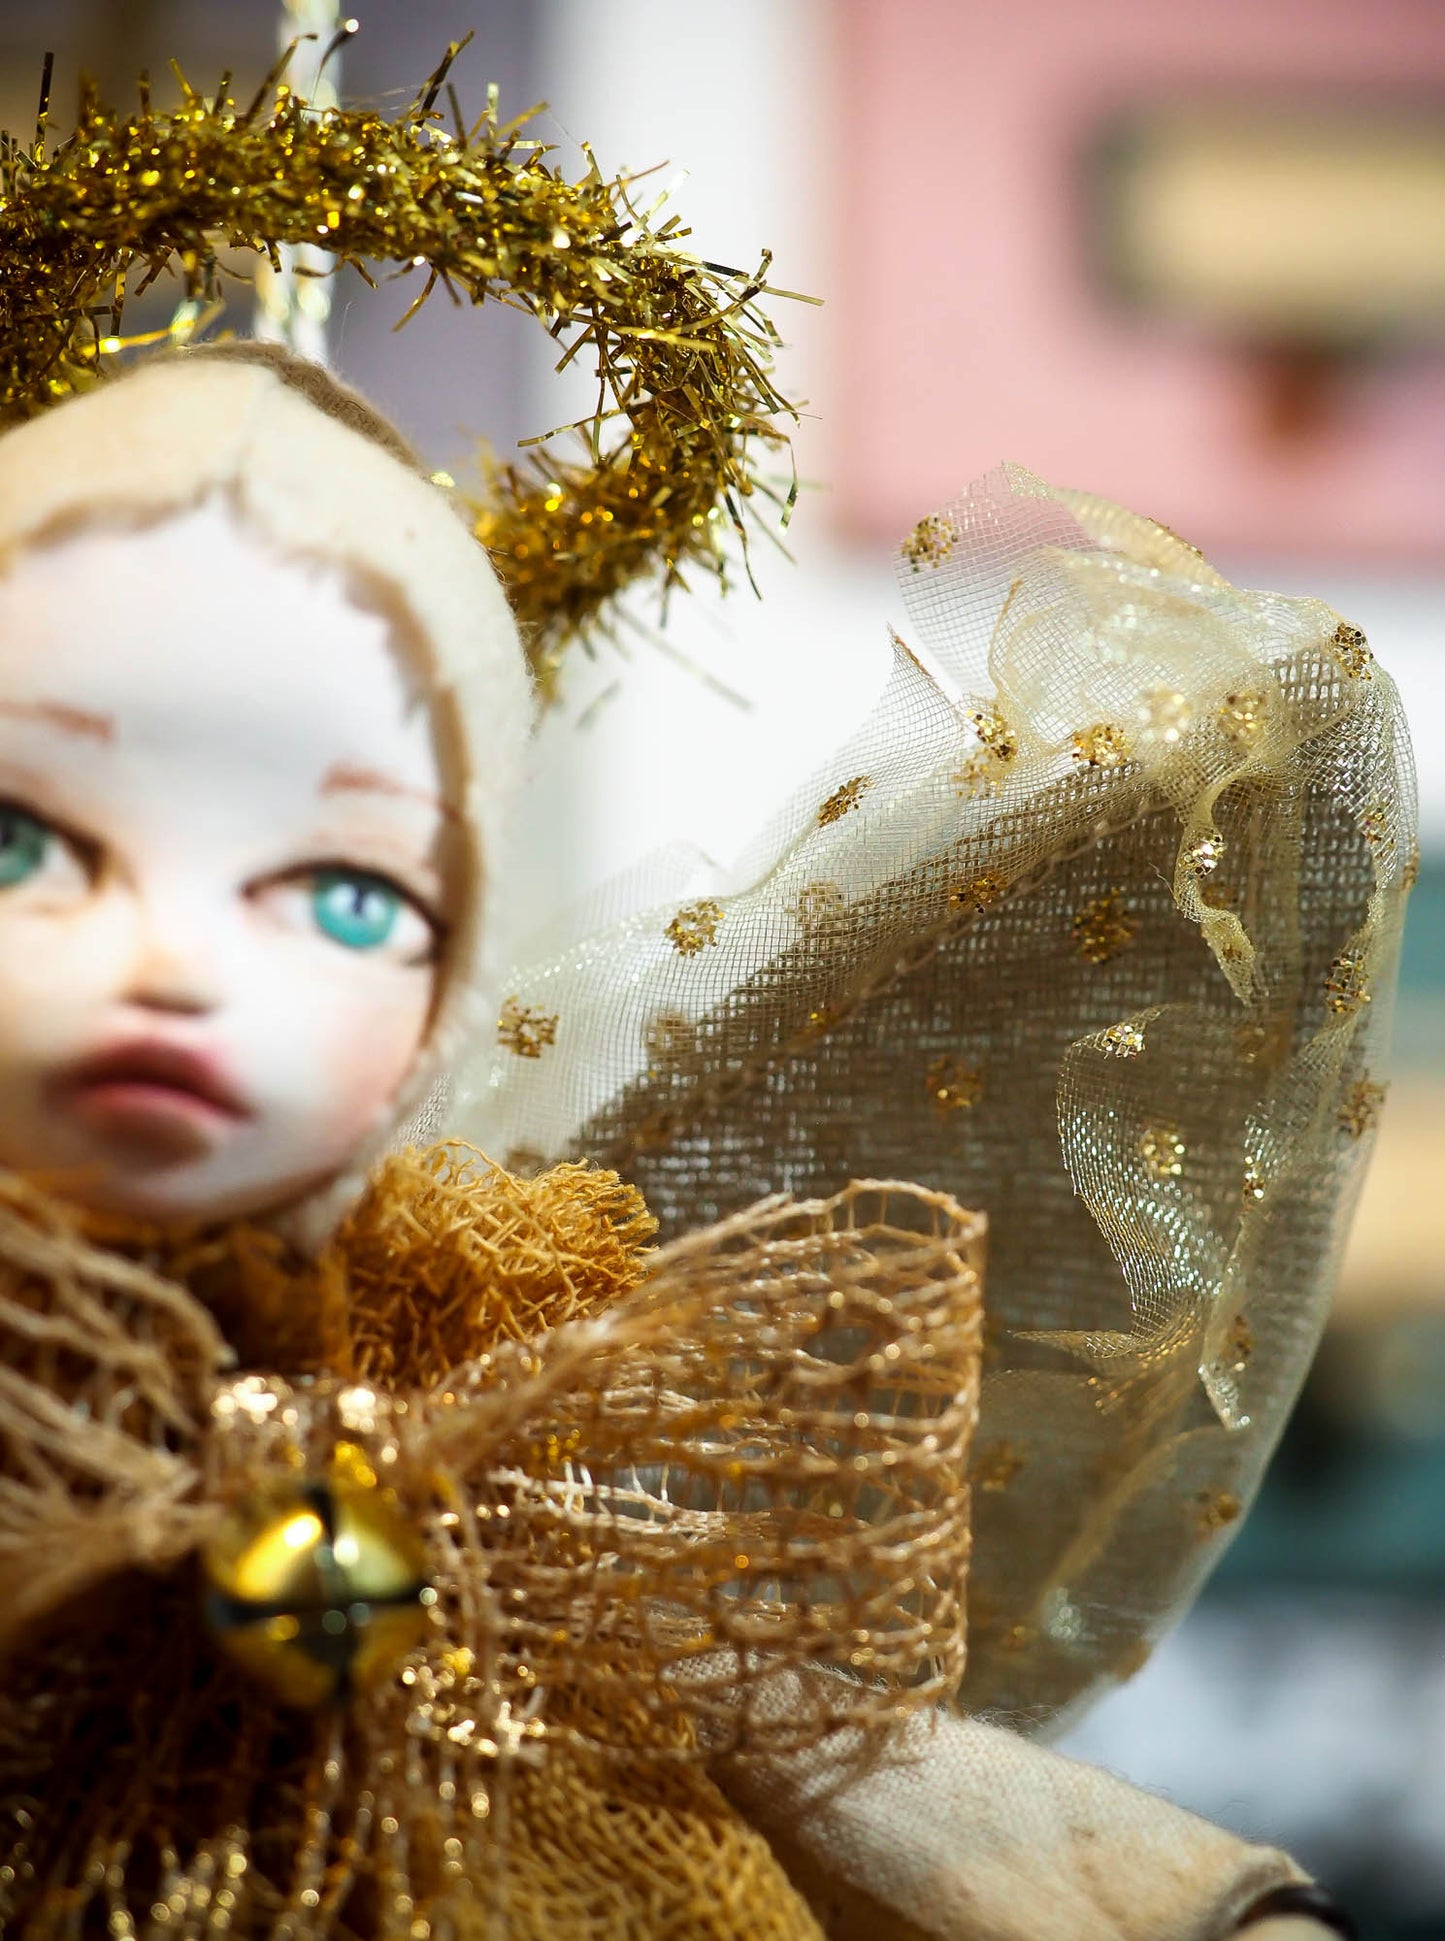 ARIEL - A Handmade Christmas tree topper angel ornament by Danita Art, Art Doll by Danita Art